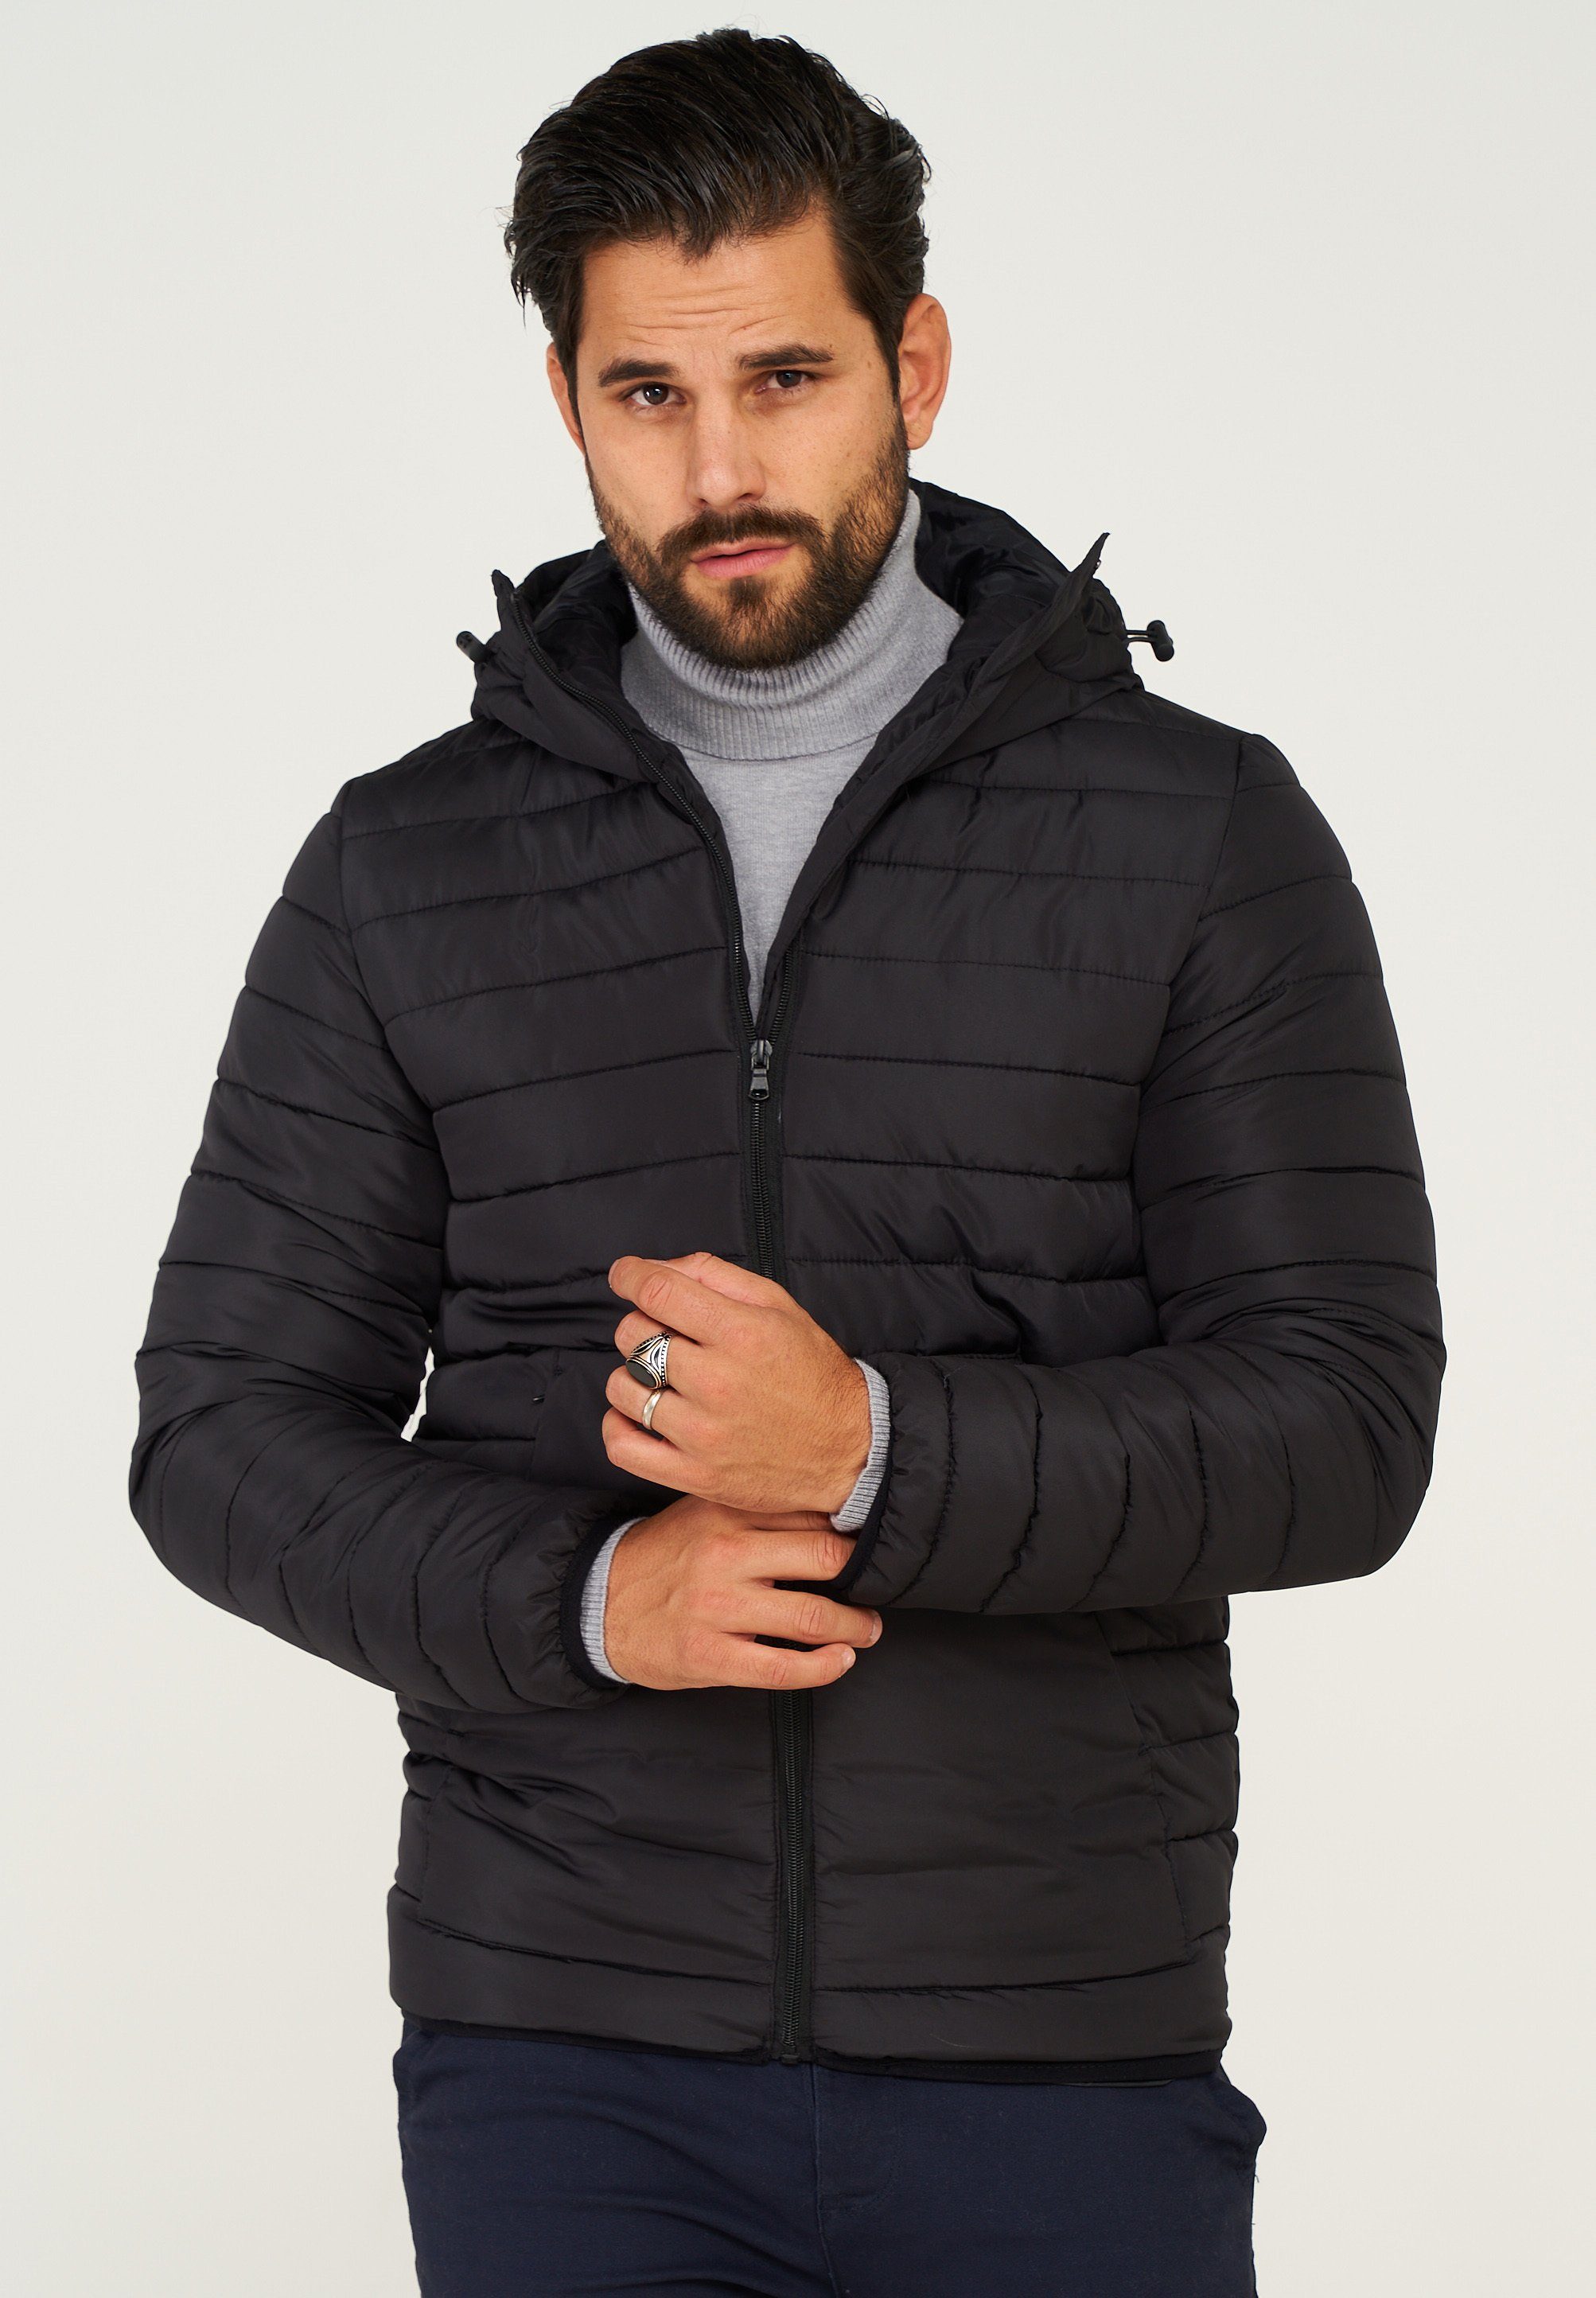 3in1 Smart Jacket - Reflektierende Jacke mit Fleece Zipp-In für